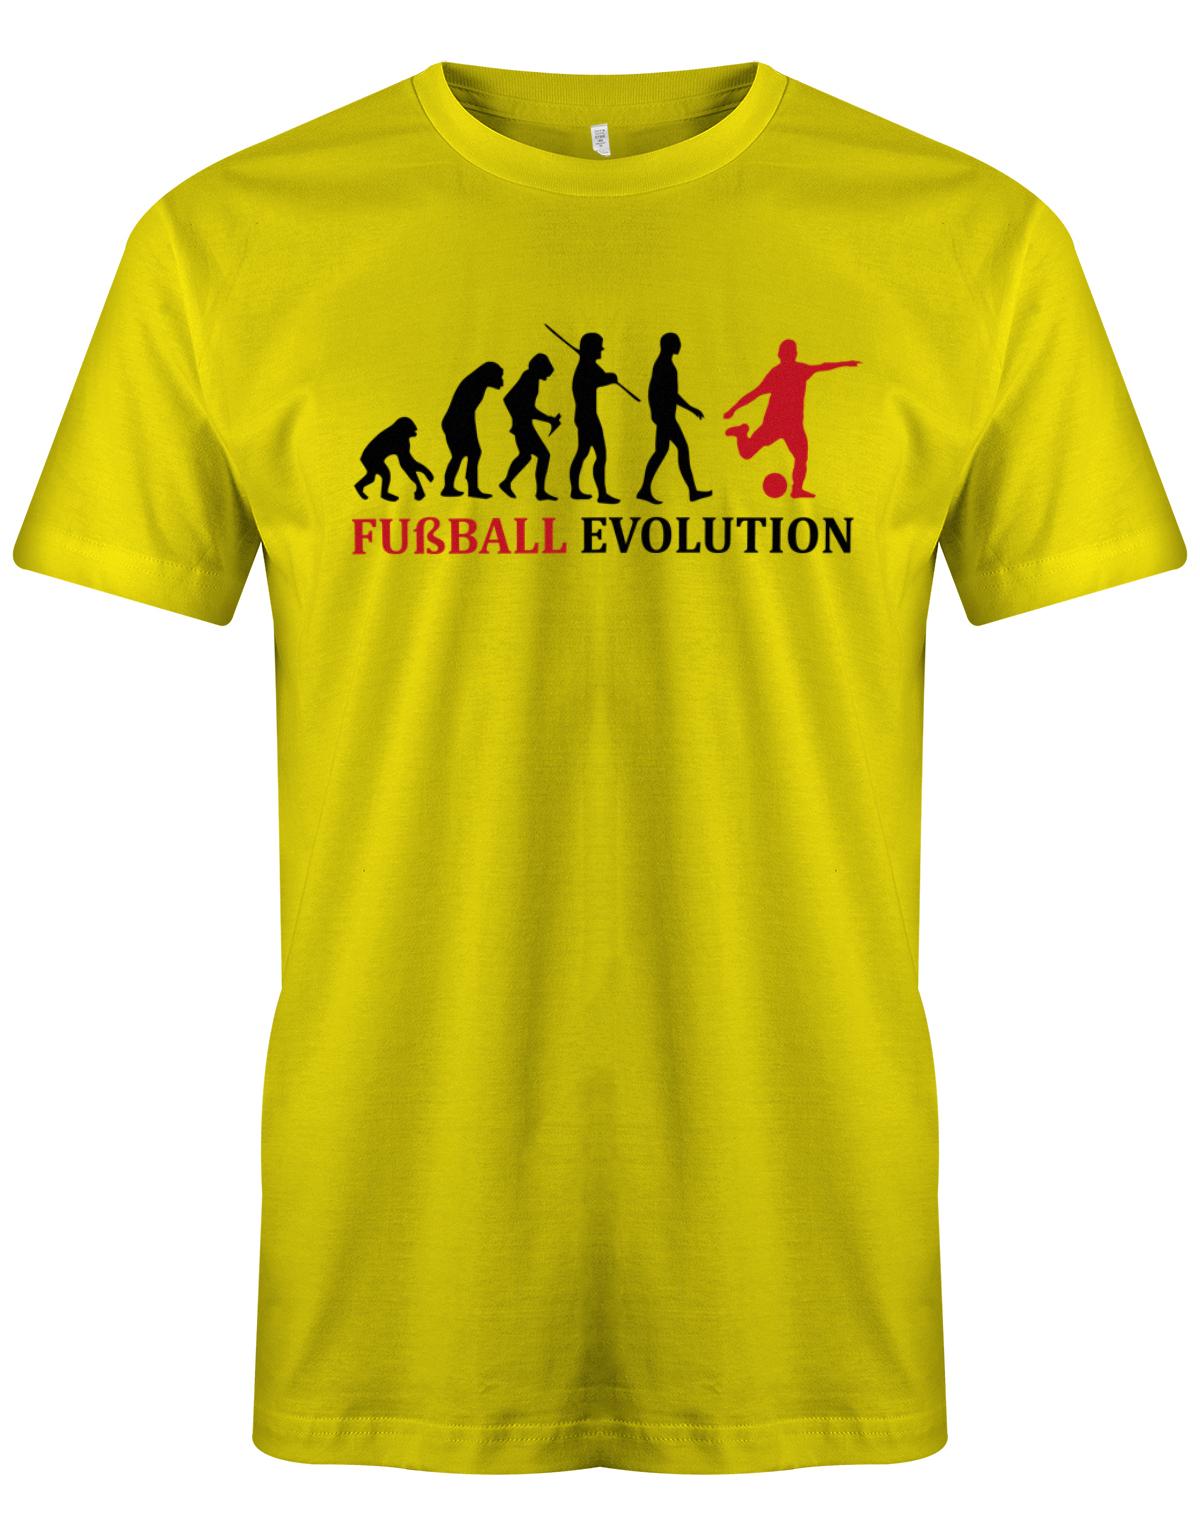 Fussball-Evolution-Herren-Shirt-Gelb-Rot